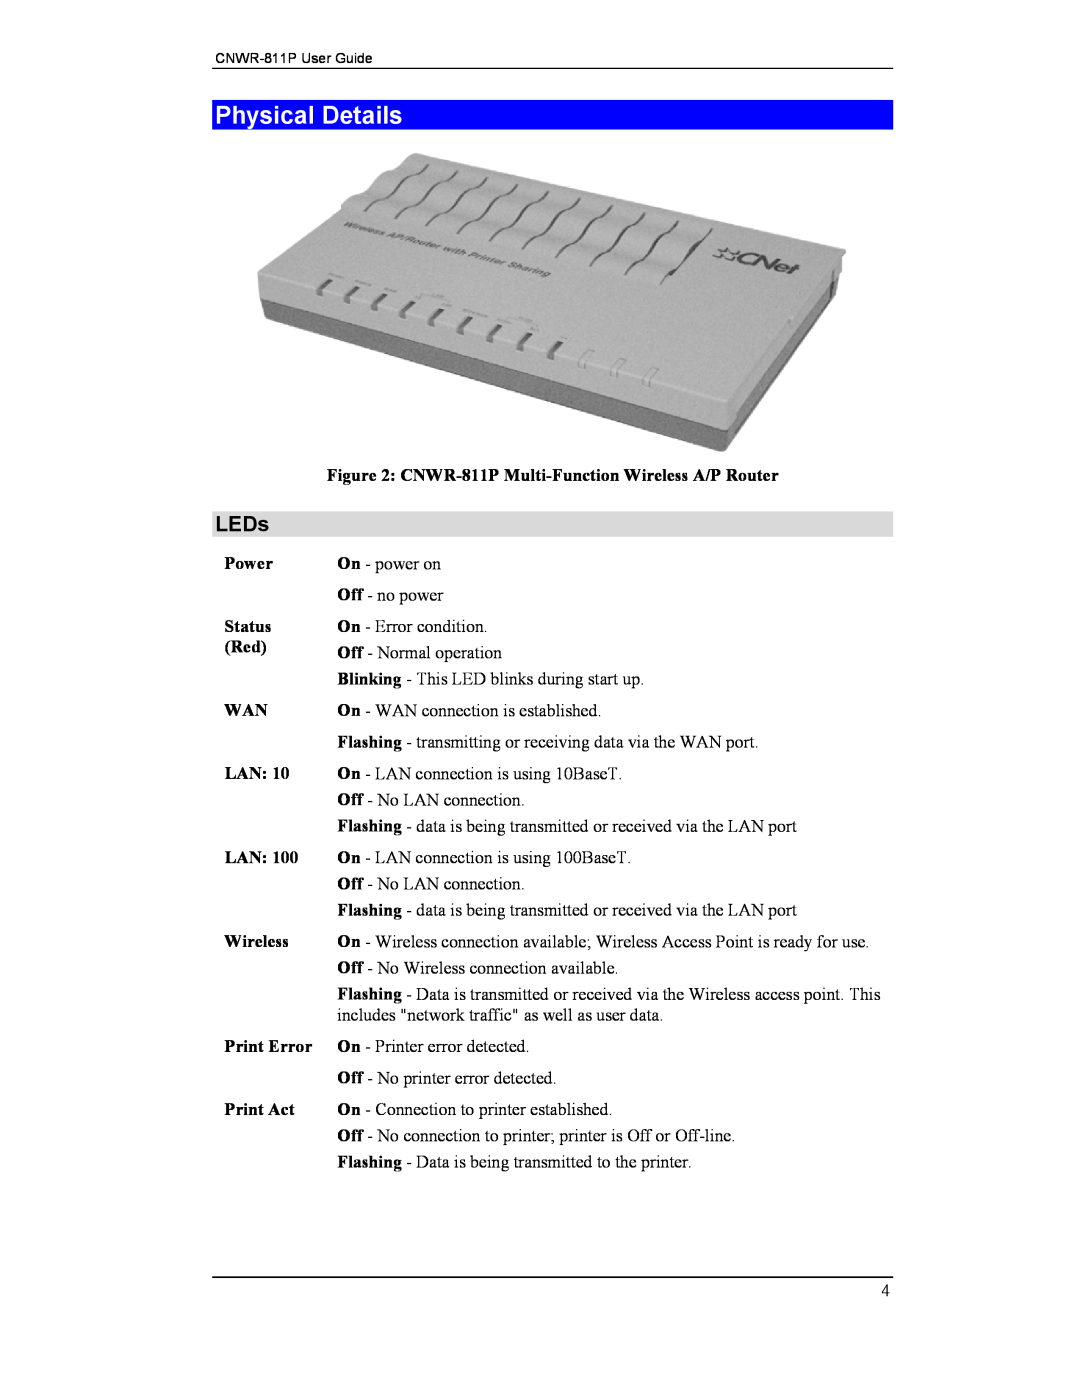 CNET CNWR-811P manual Physical Details, LEDs 